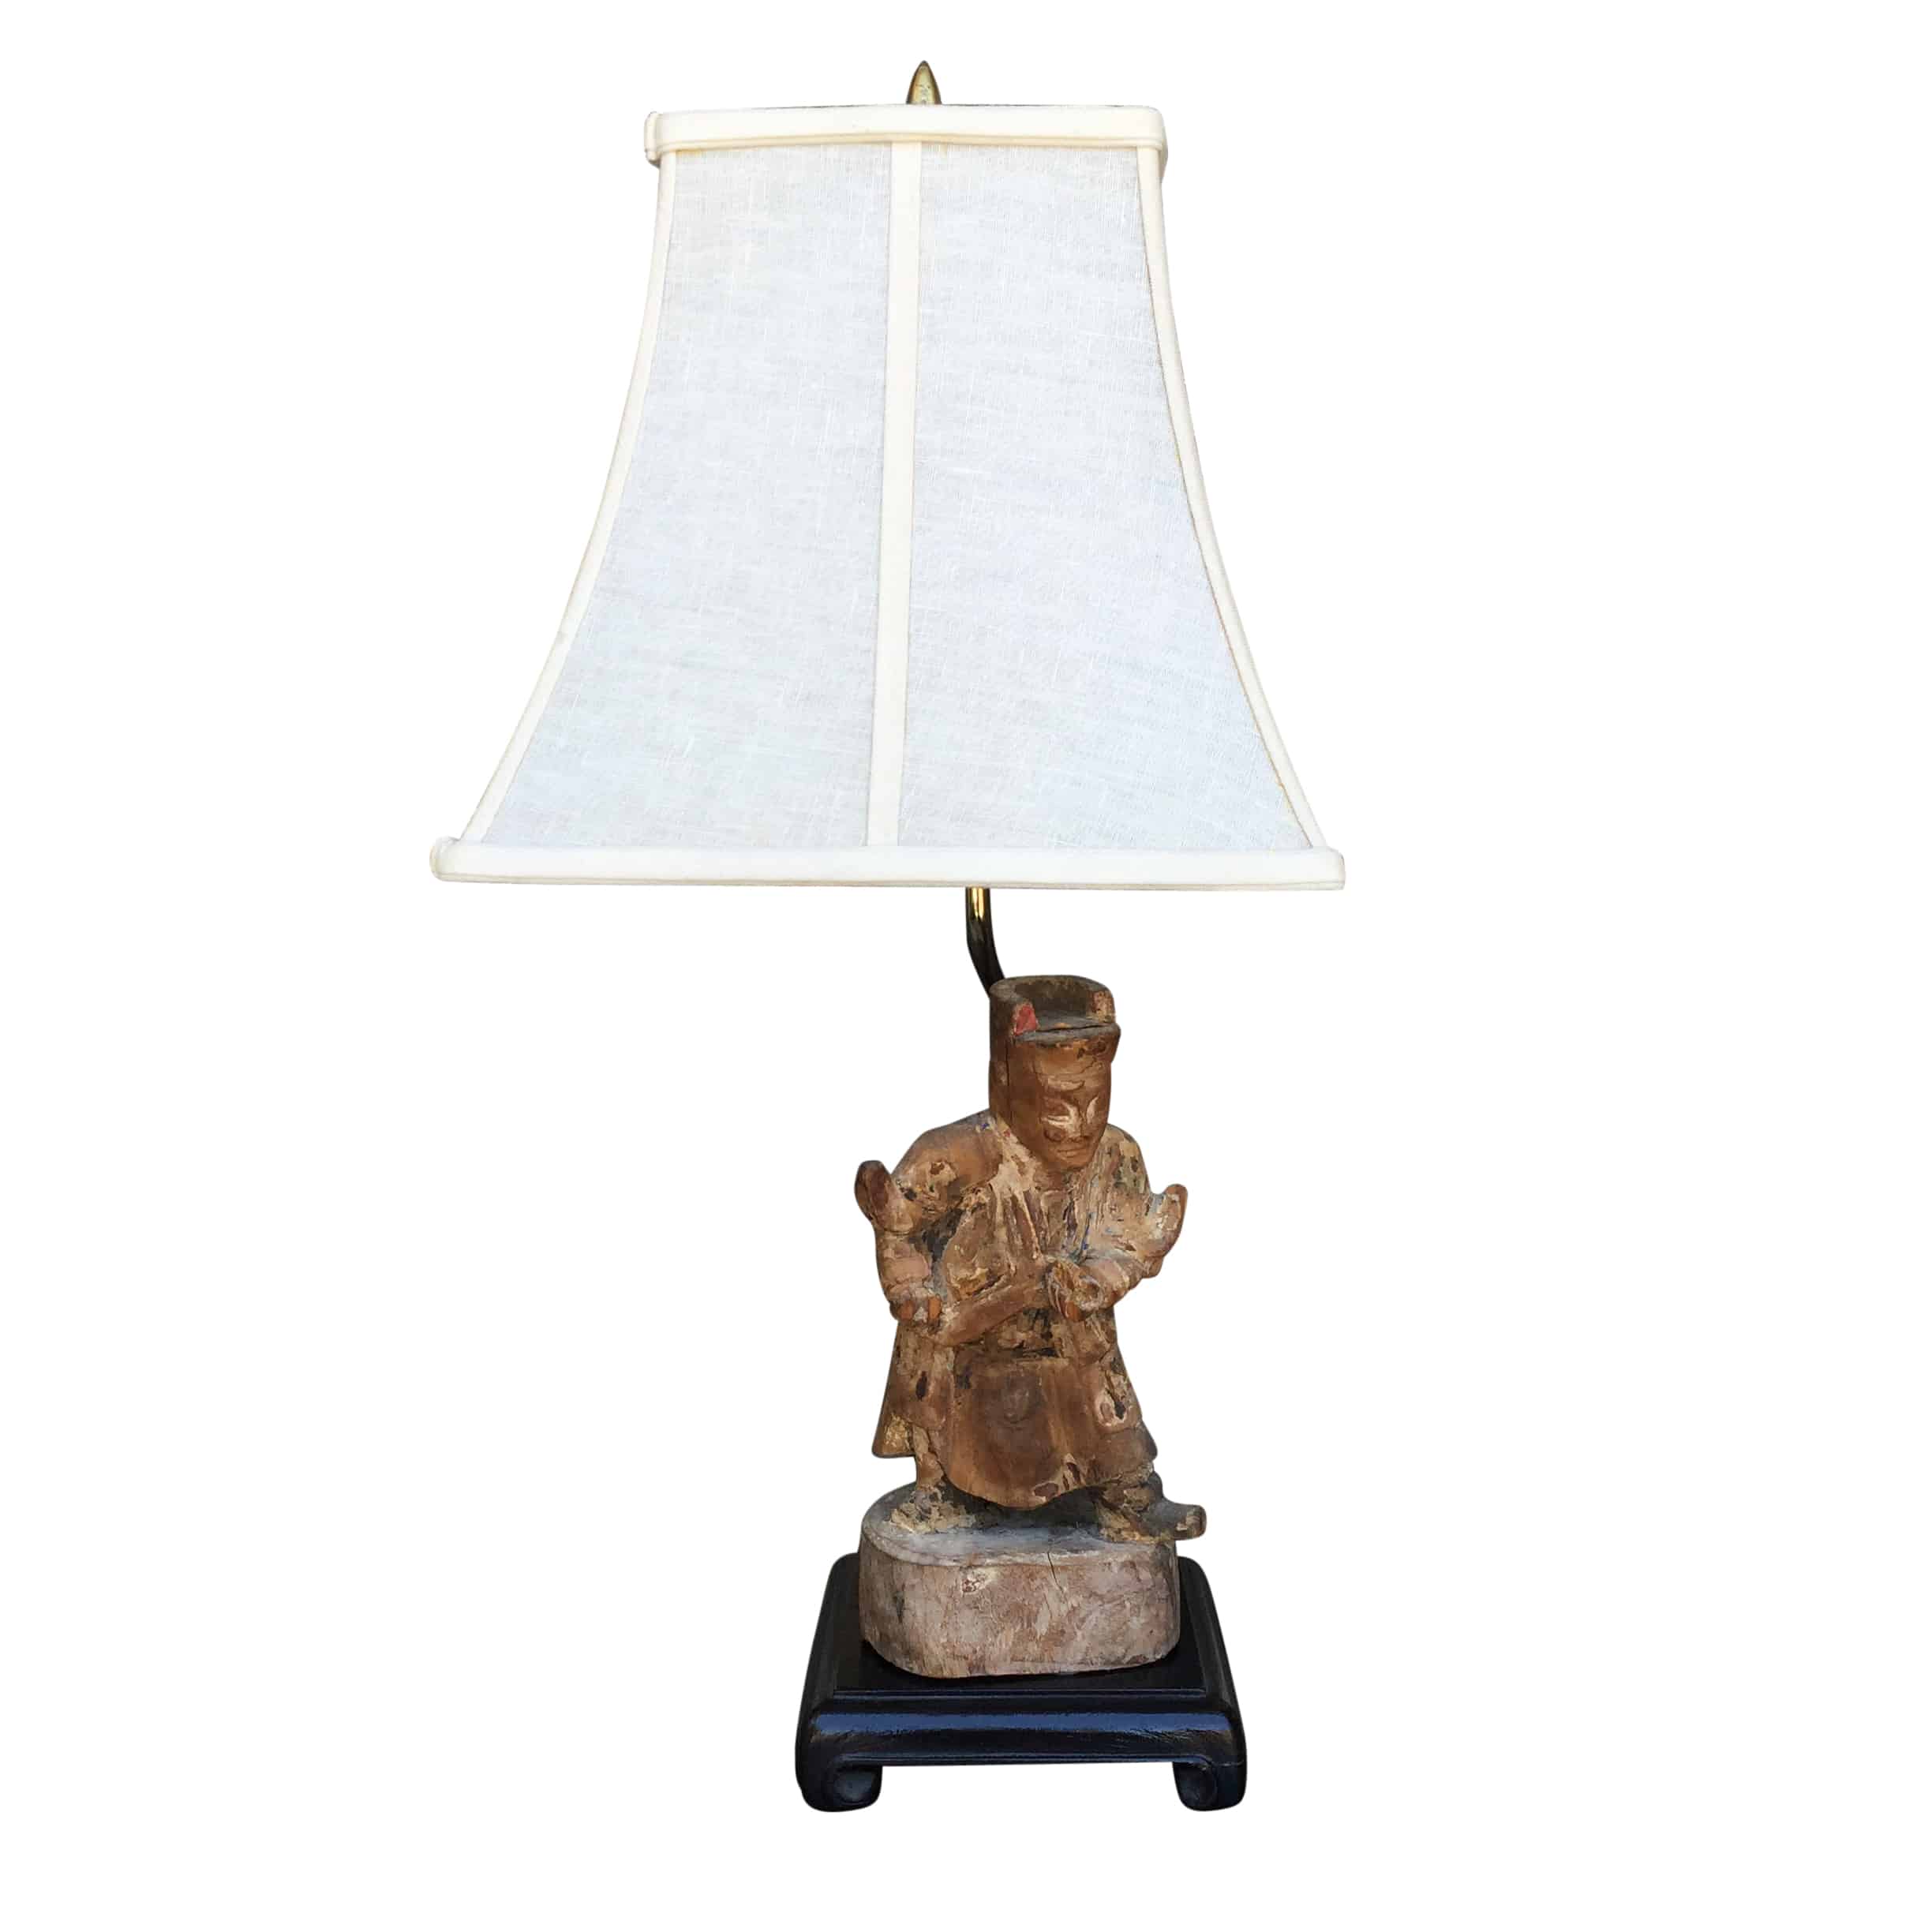 Antique Asian Figurine Lamp Cabana Home, Antique Oriental Figurine Lamps